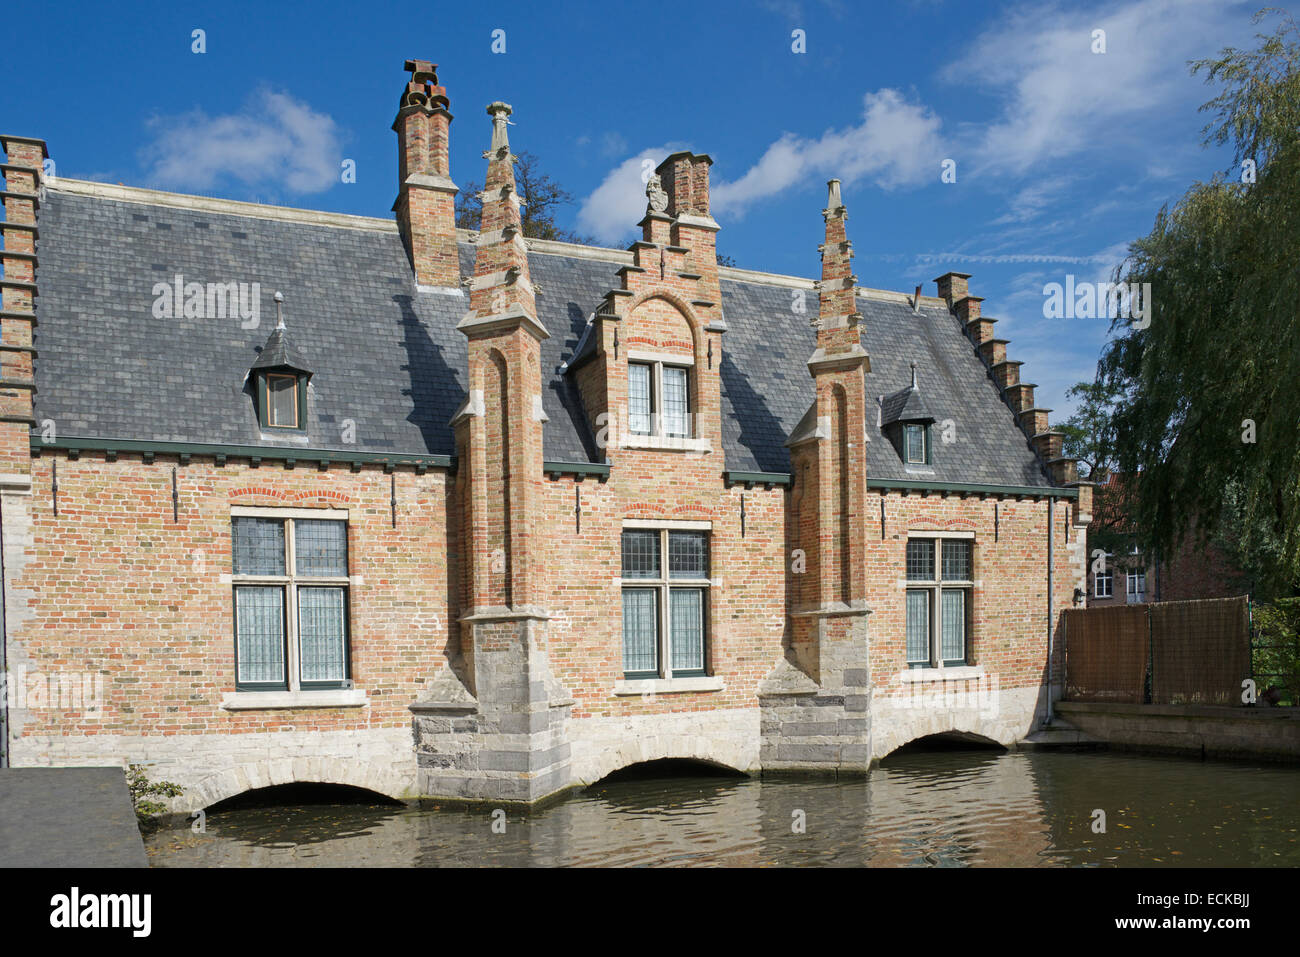 Serratura a capanna keeper house o sluice house Minnewater Bruges Belgio Foto Stock